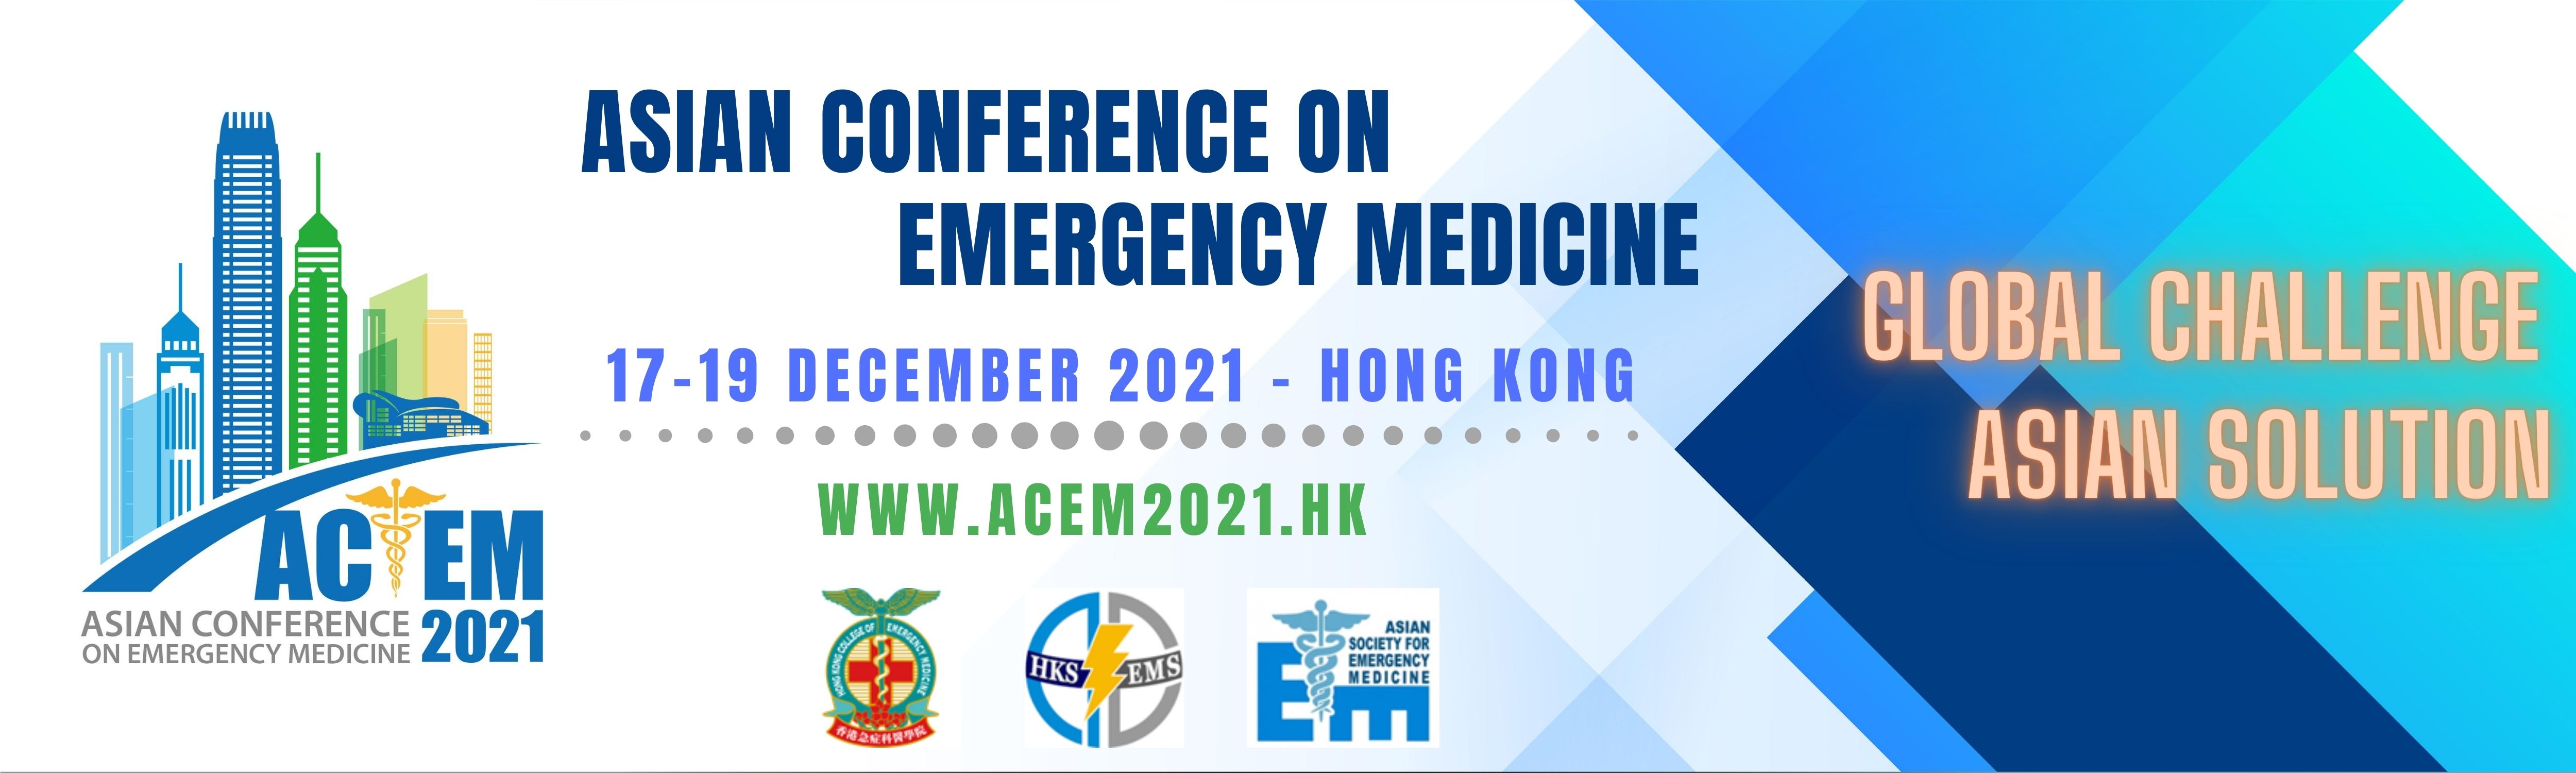 Web Banner ACEM2021